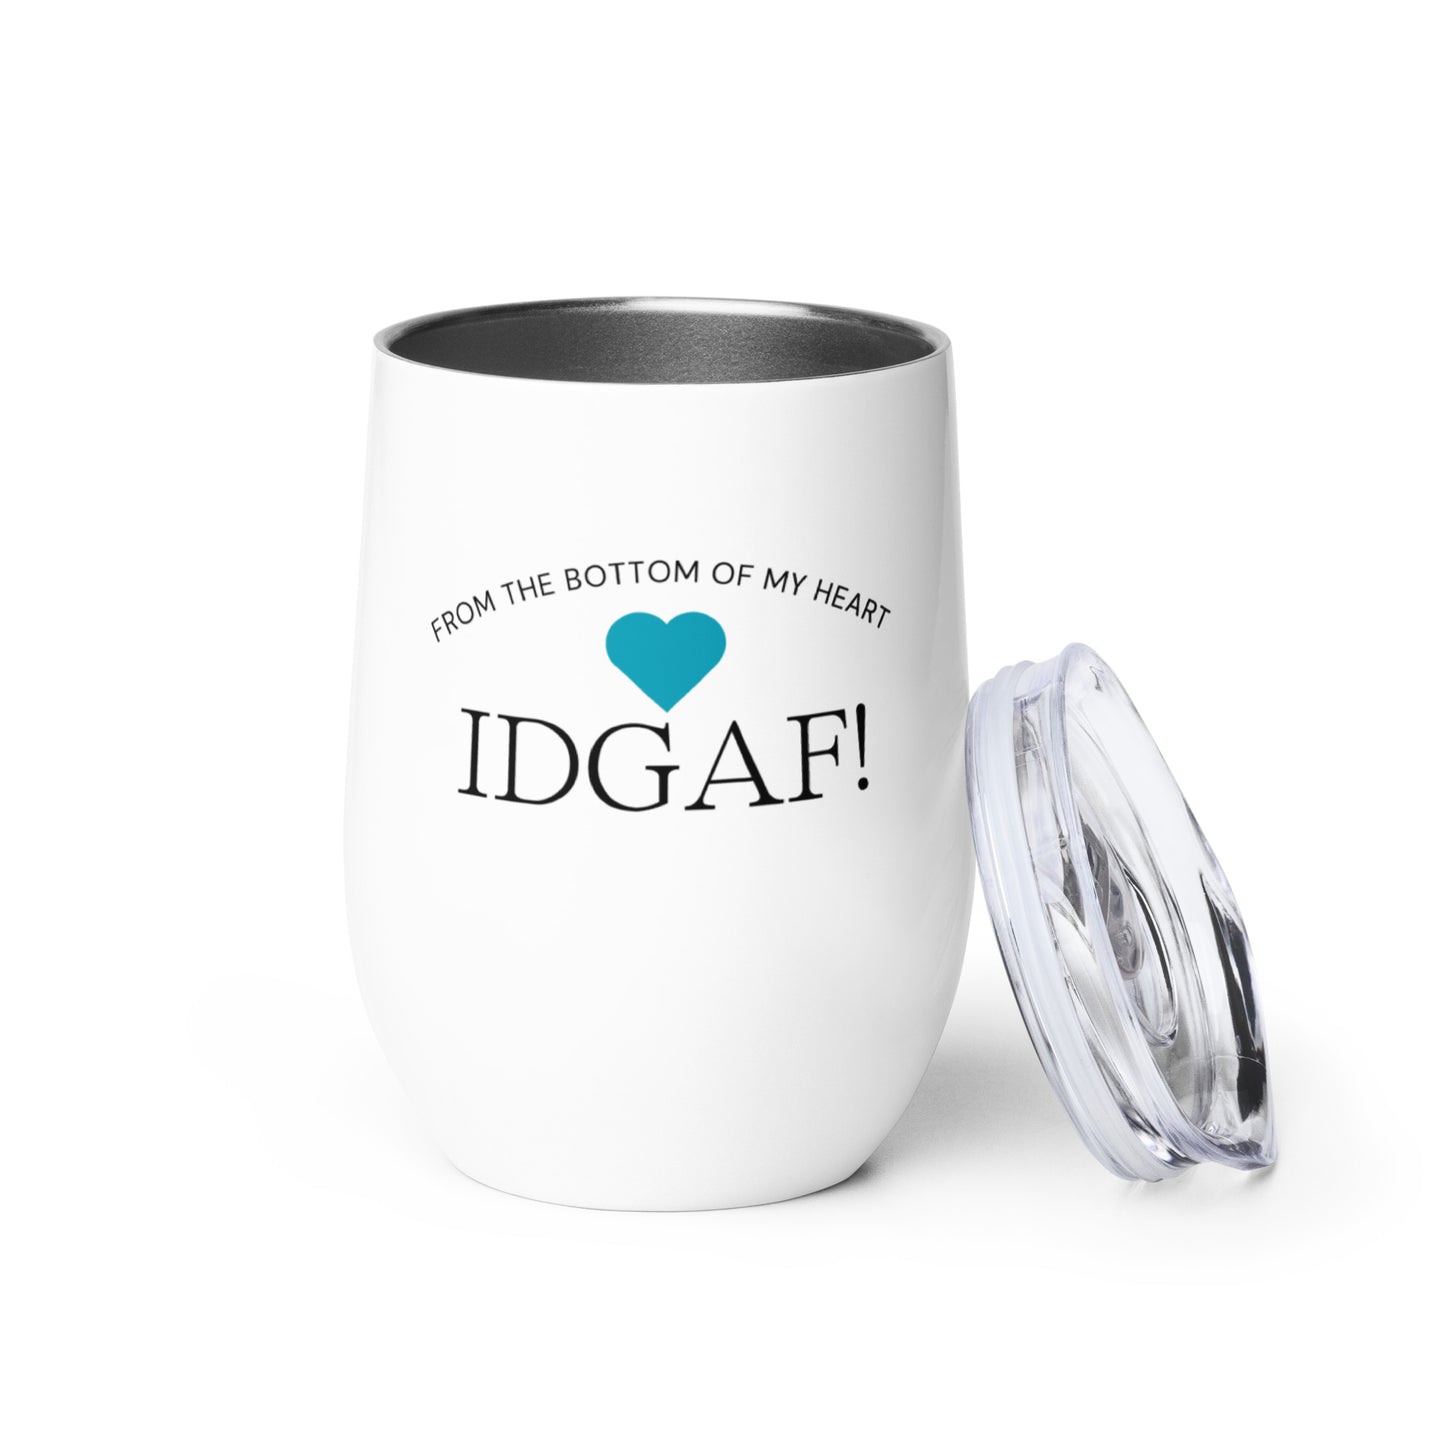 IDGAF ! - Wine tumbler